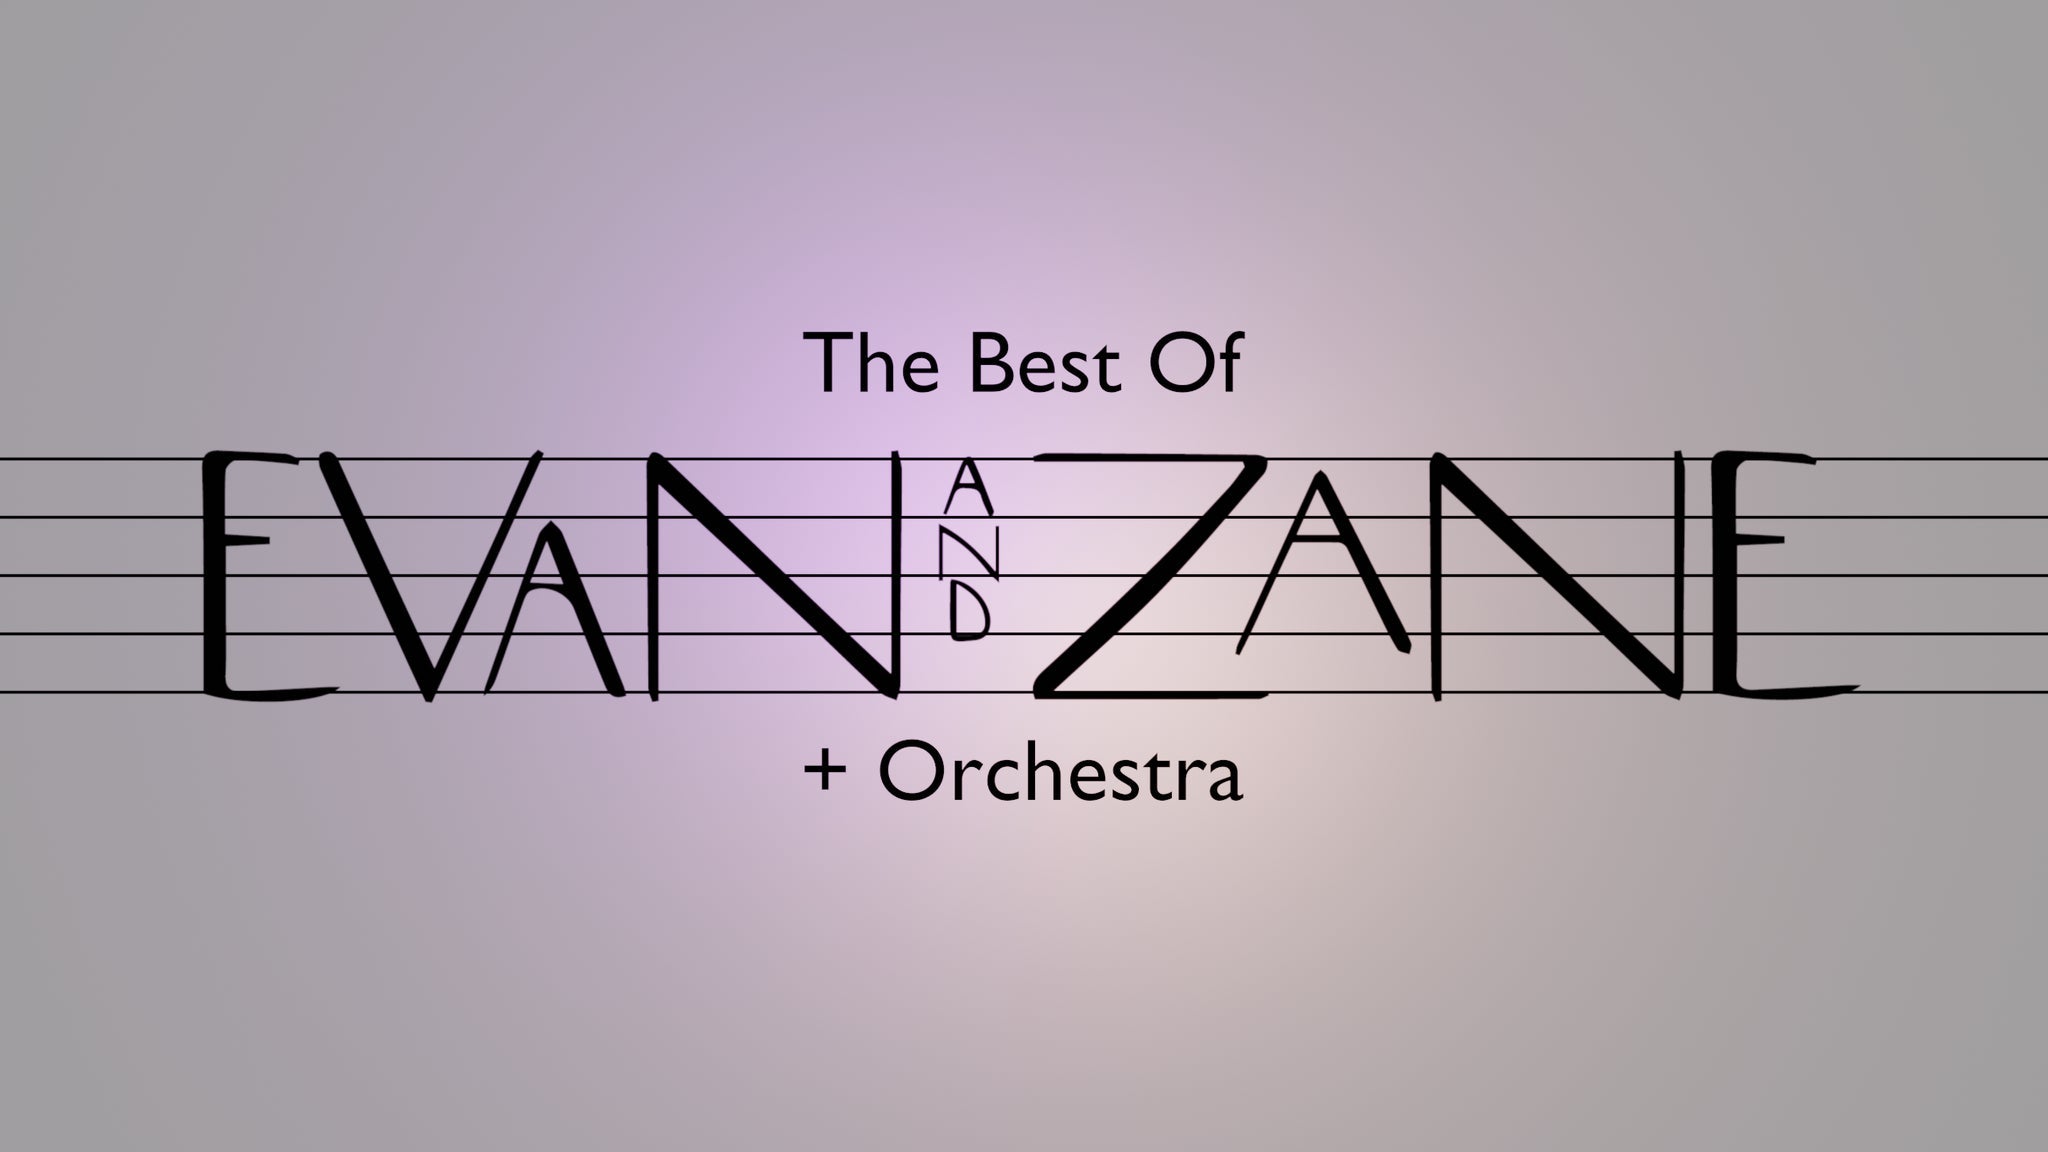 The Best Of Evan + Zane + Orchestra in Glendale promo photo for 2023  presale offer code